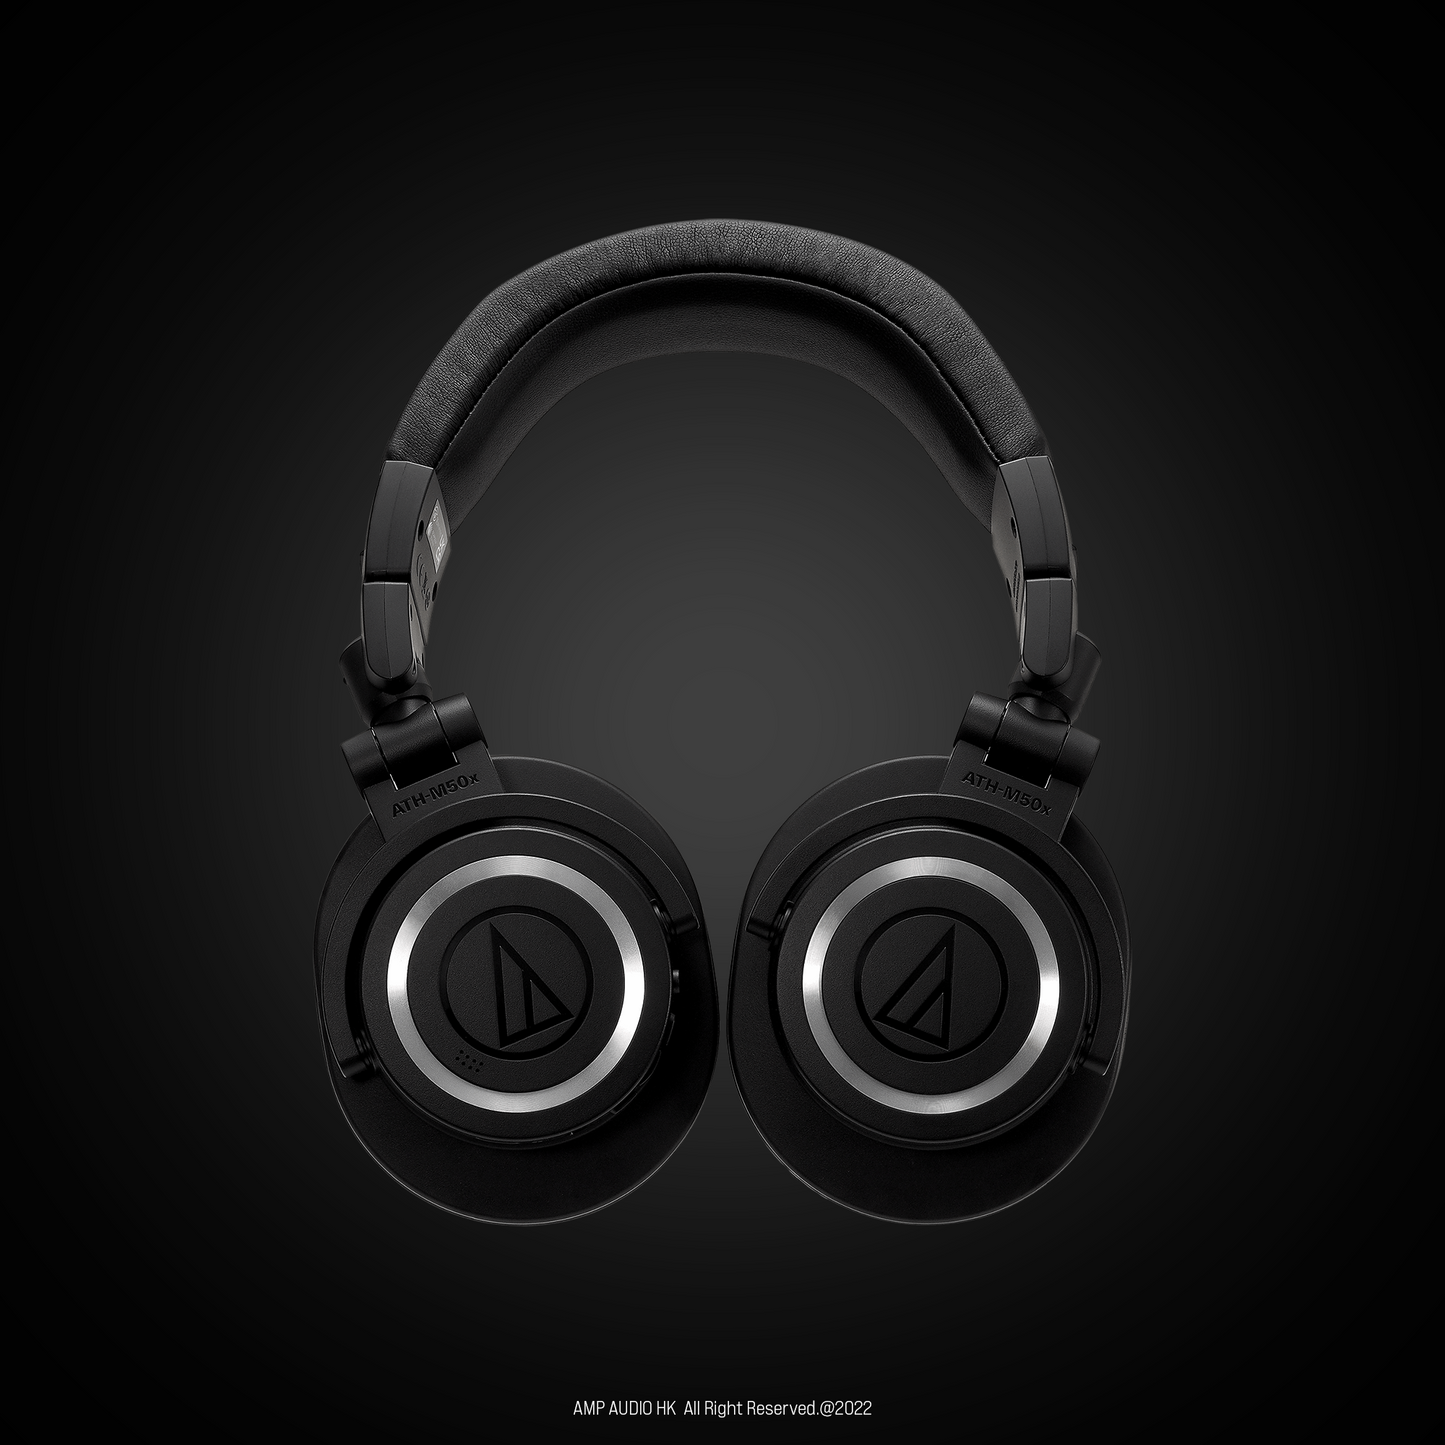 Audio Technica | ATH-M50xBT2